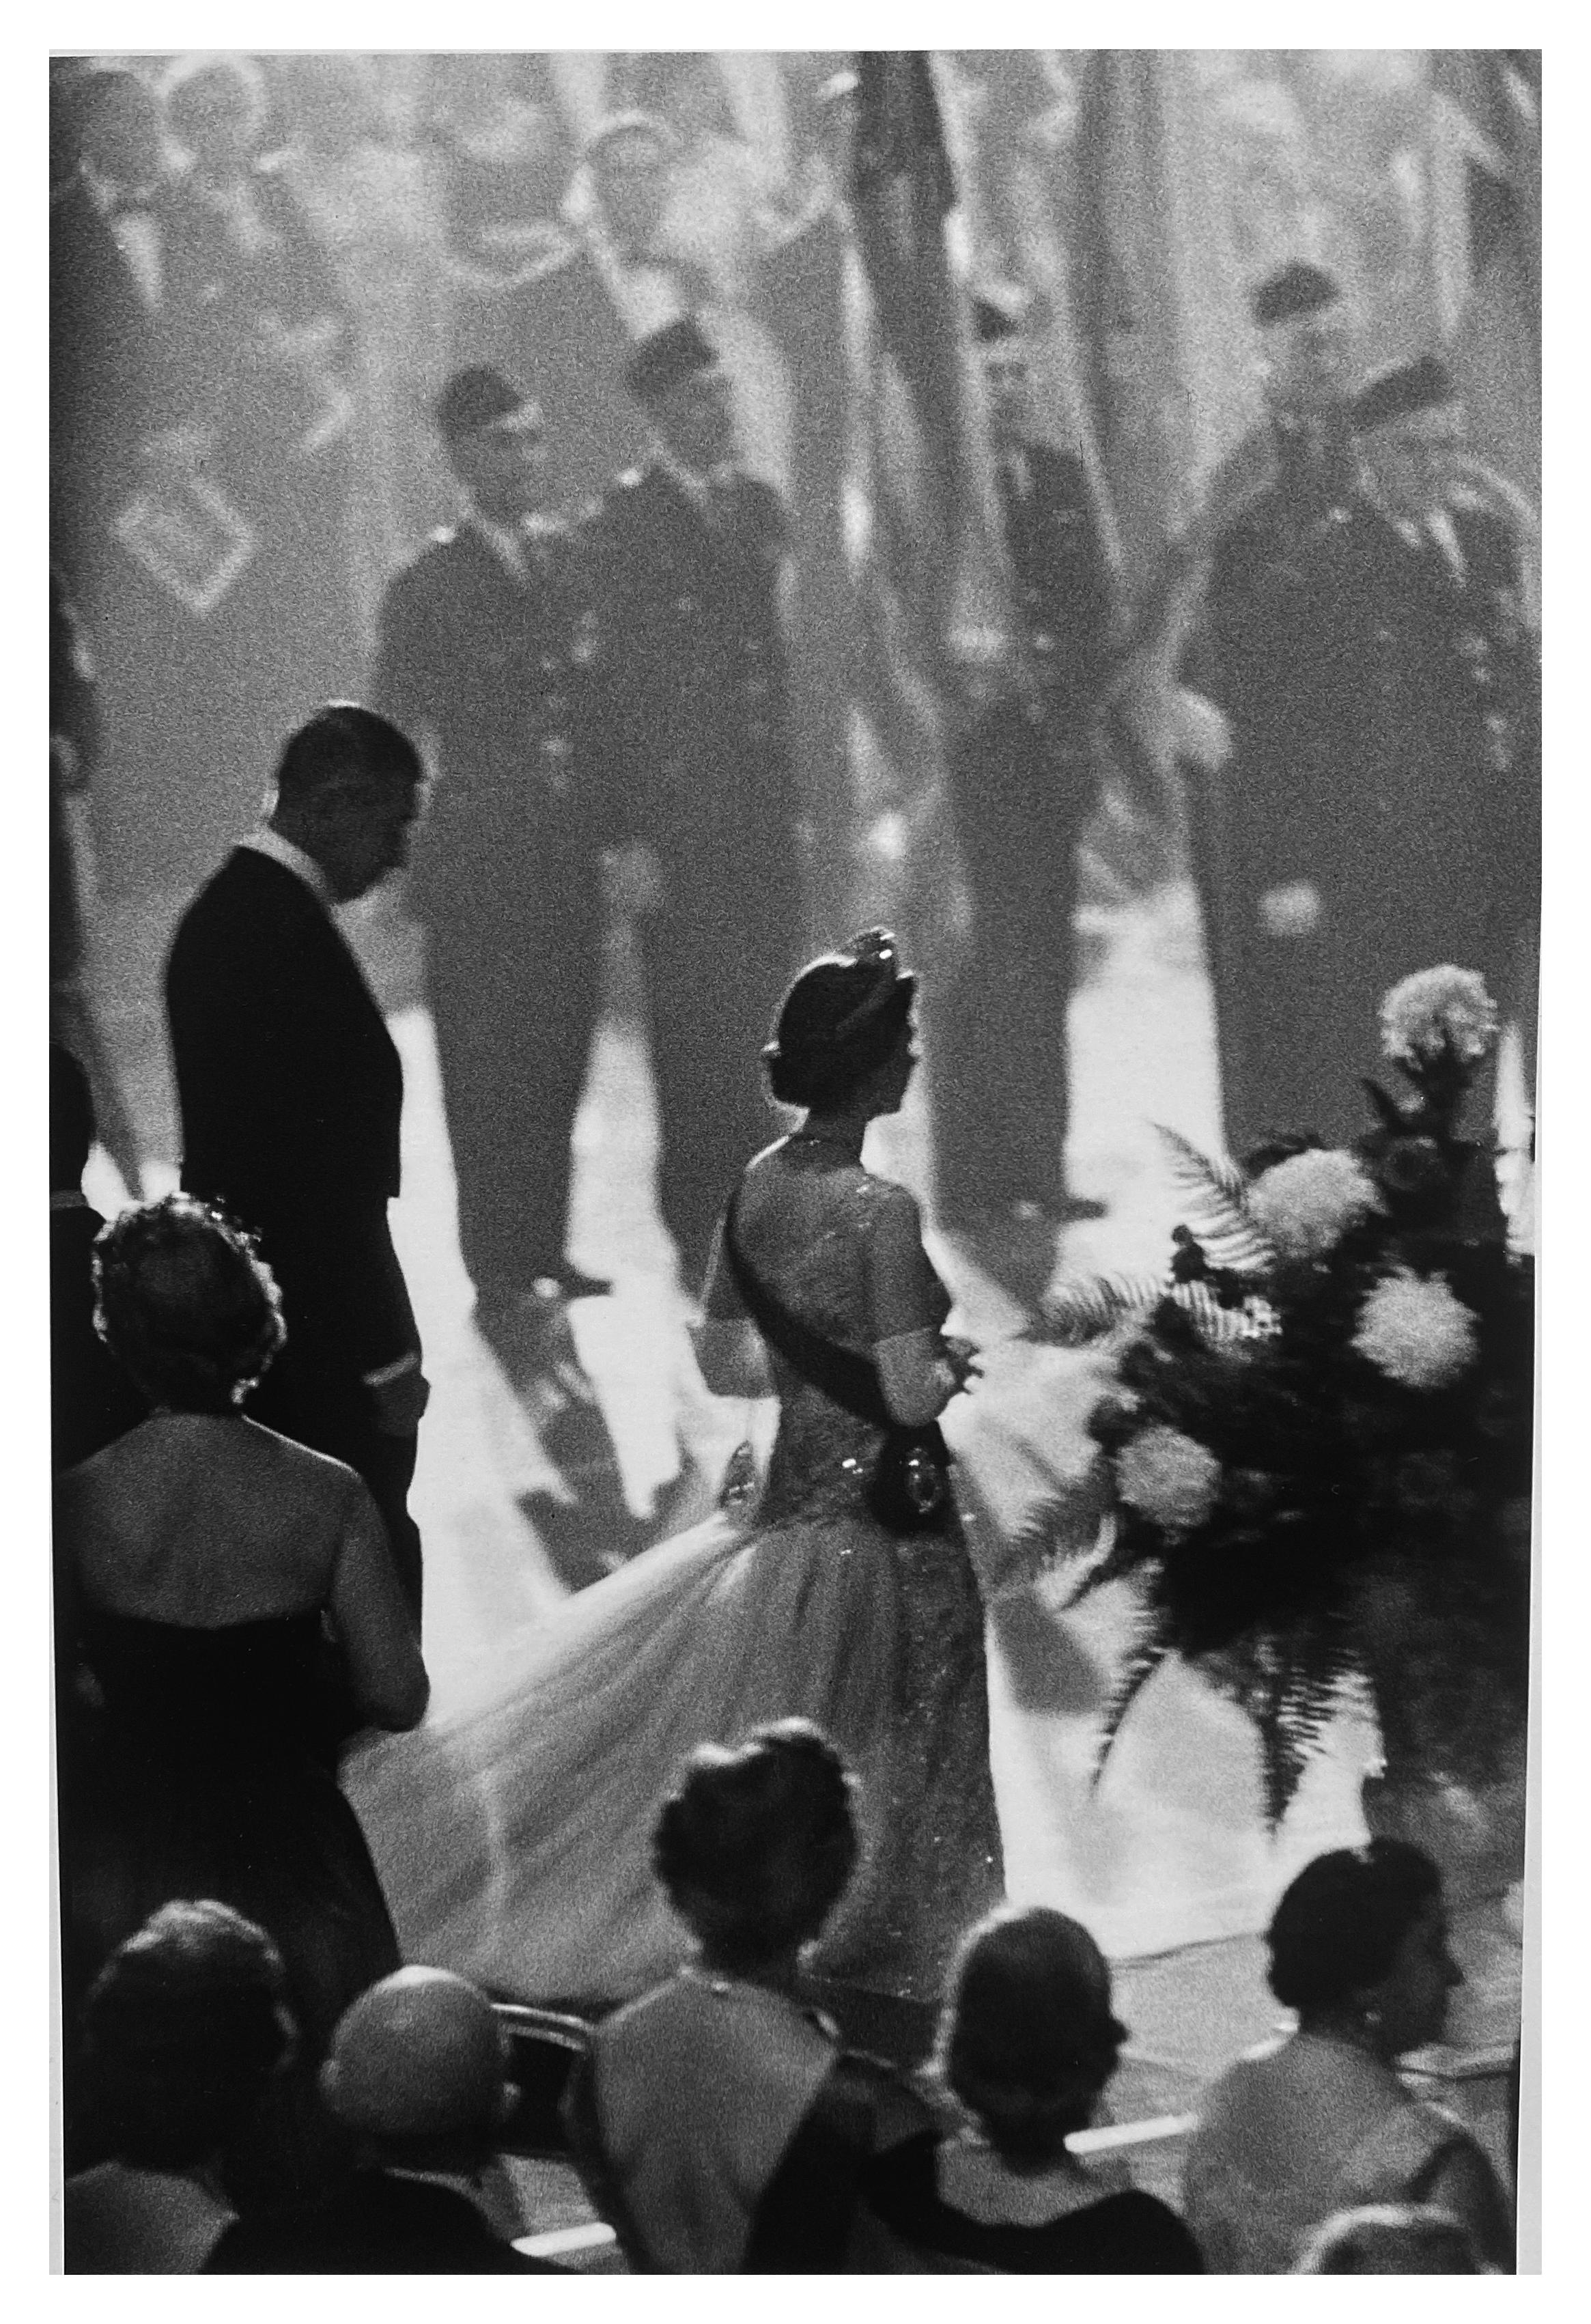 Queen Elizabeth II Visit to America, New York City 1950s, Gelatin Silver Print - Contemporary Photograph by Burt Glinn